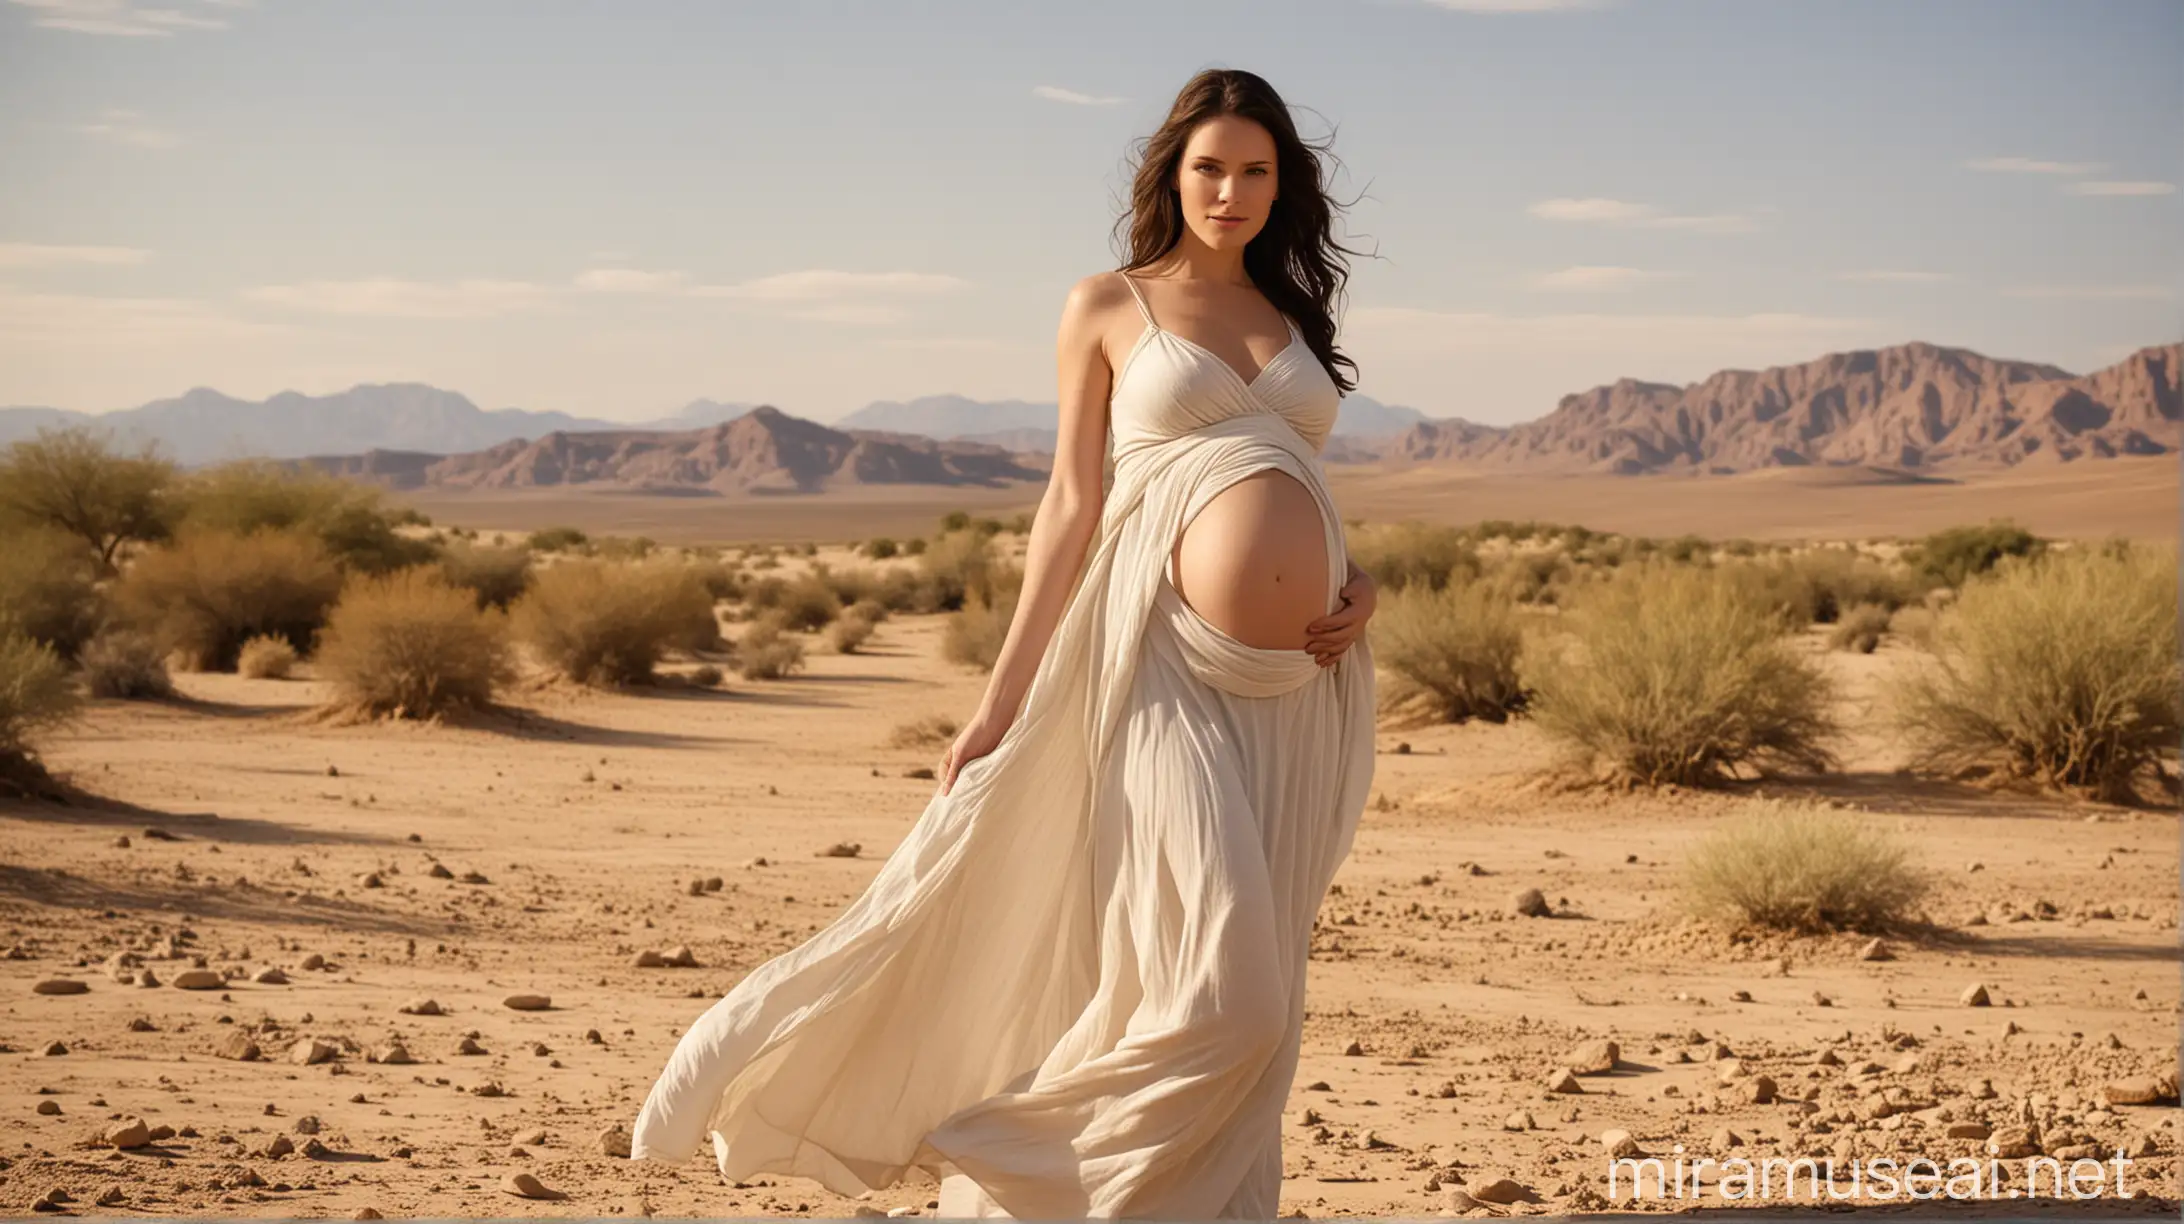 Pregnant Woman in Biblical Moses Era Desert Scene